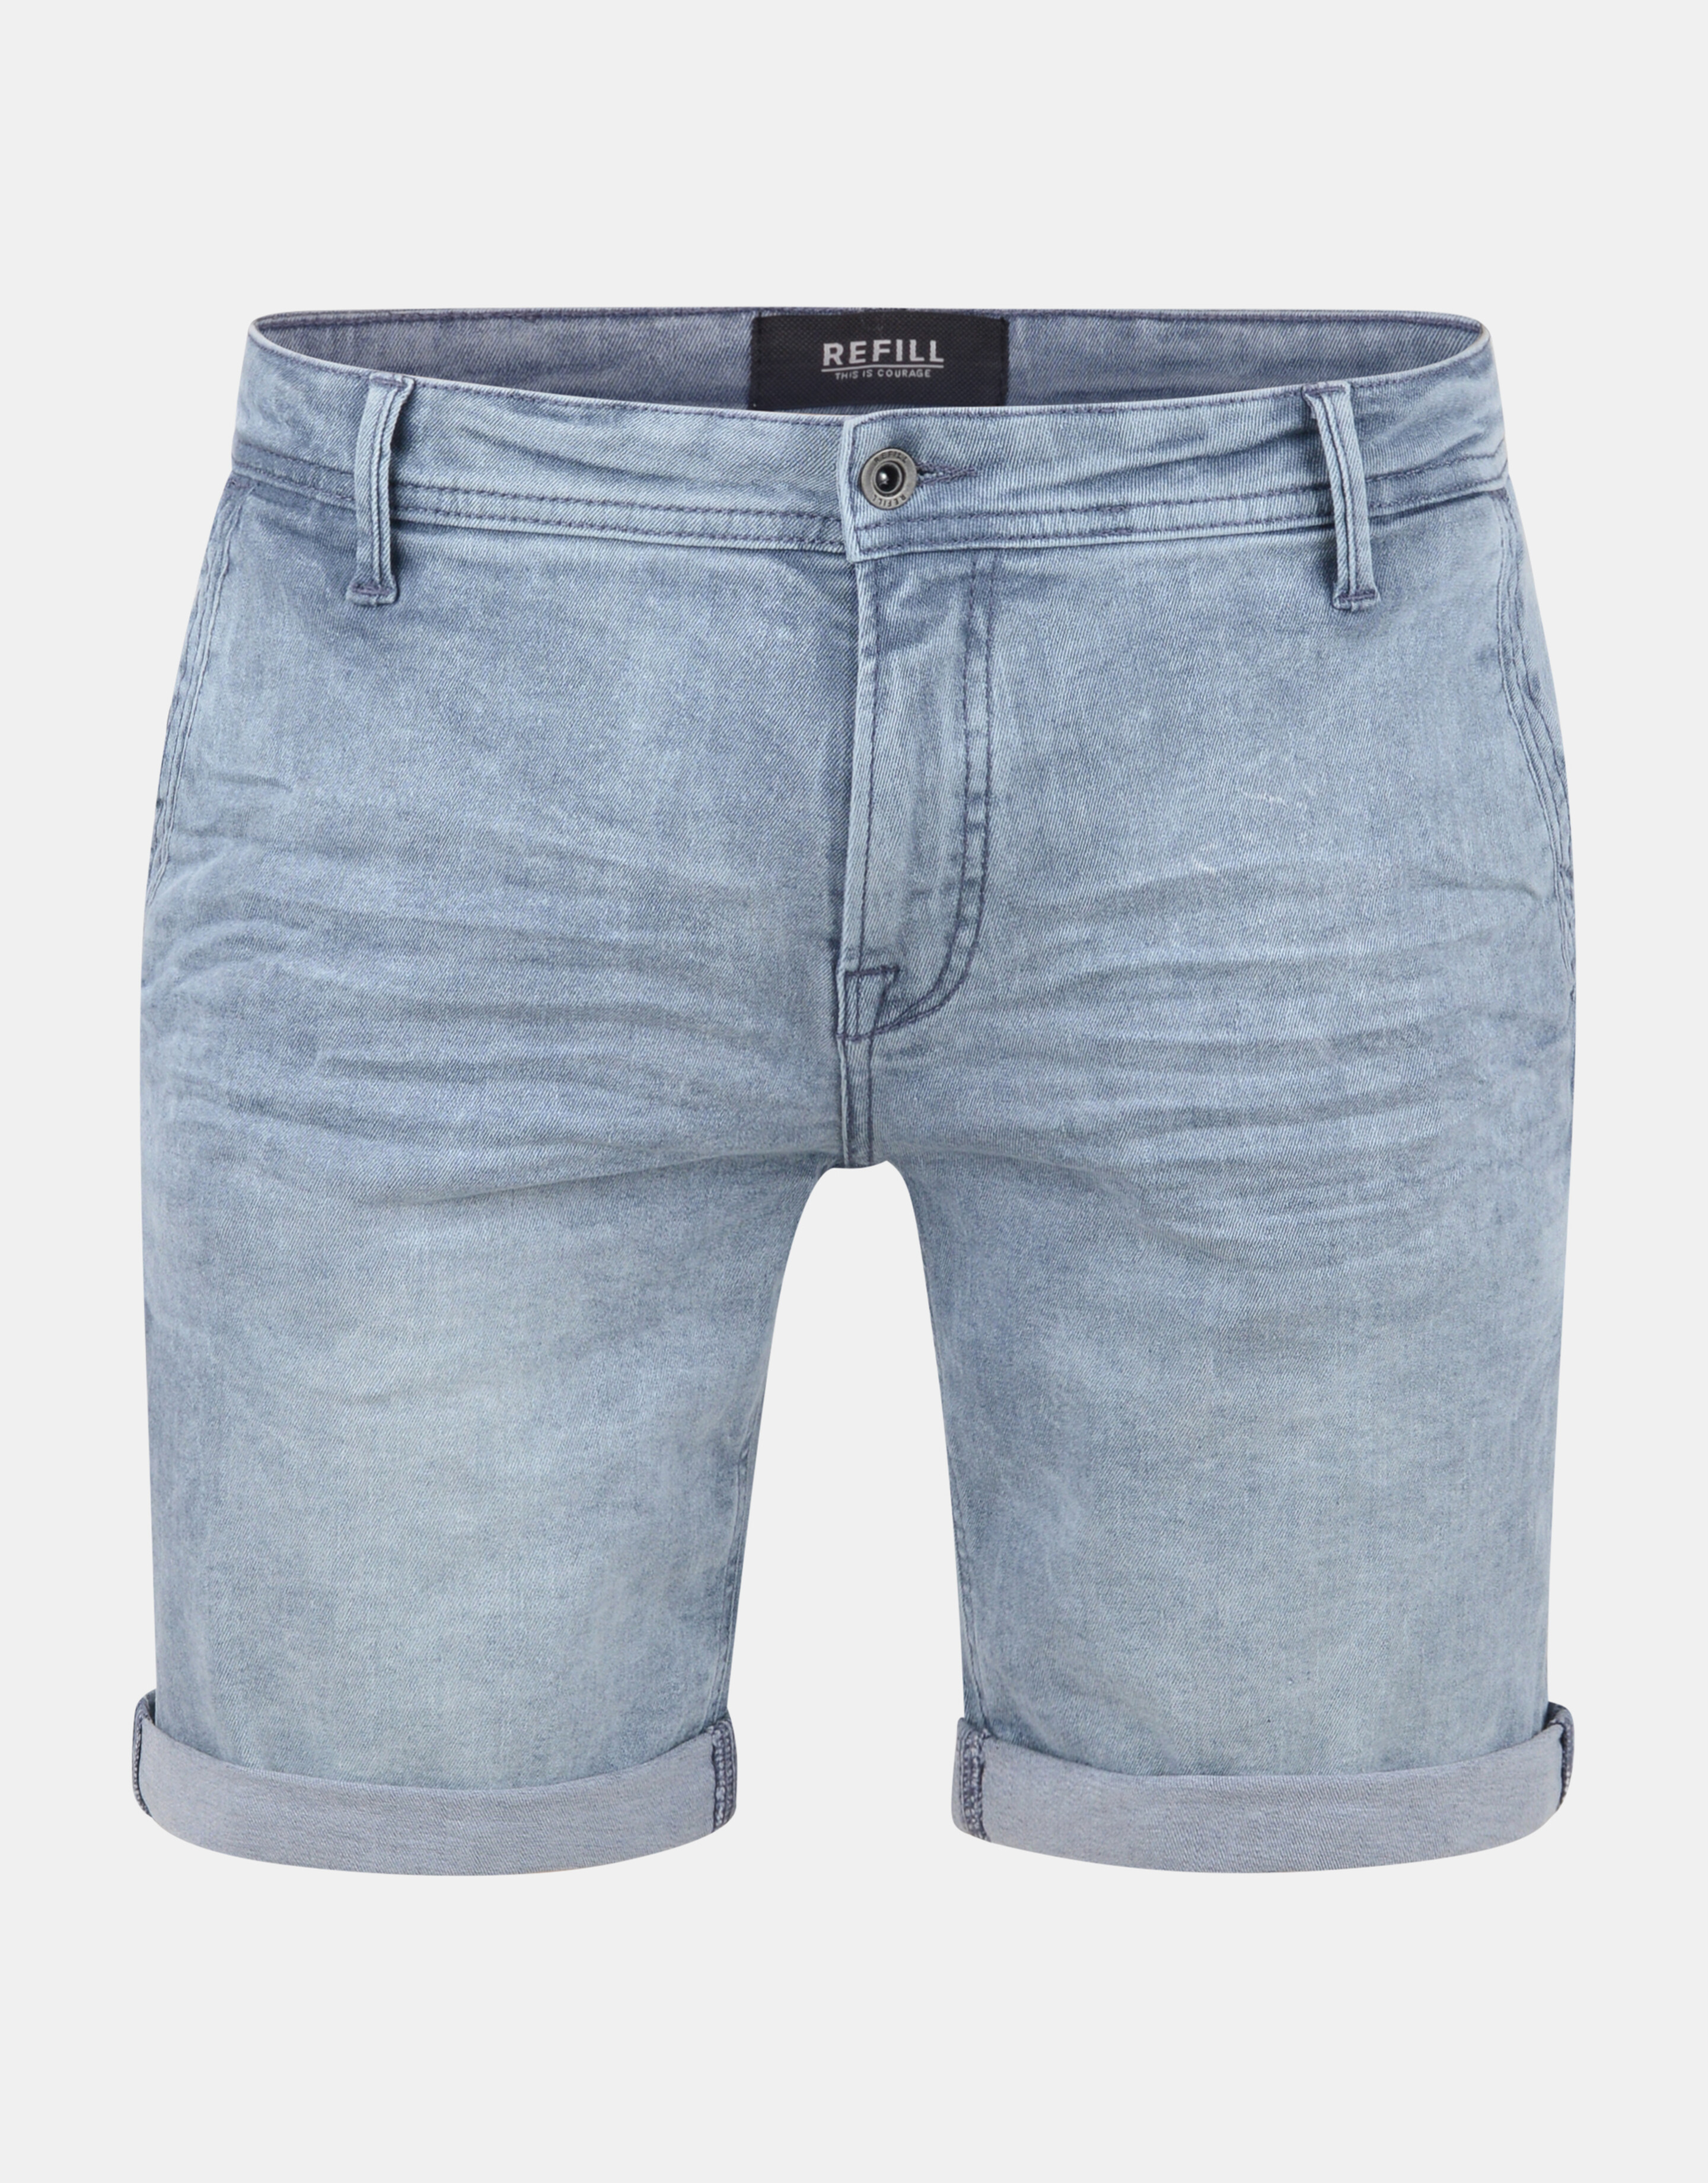 Zeno Denim Shorts | Refill